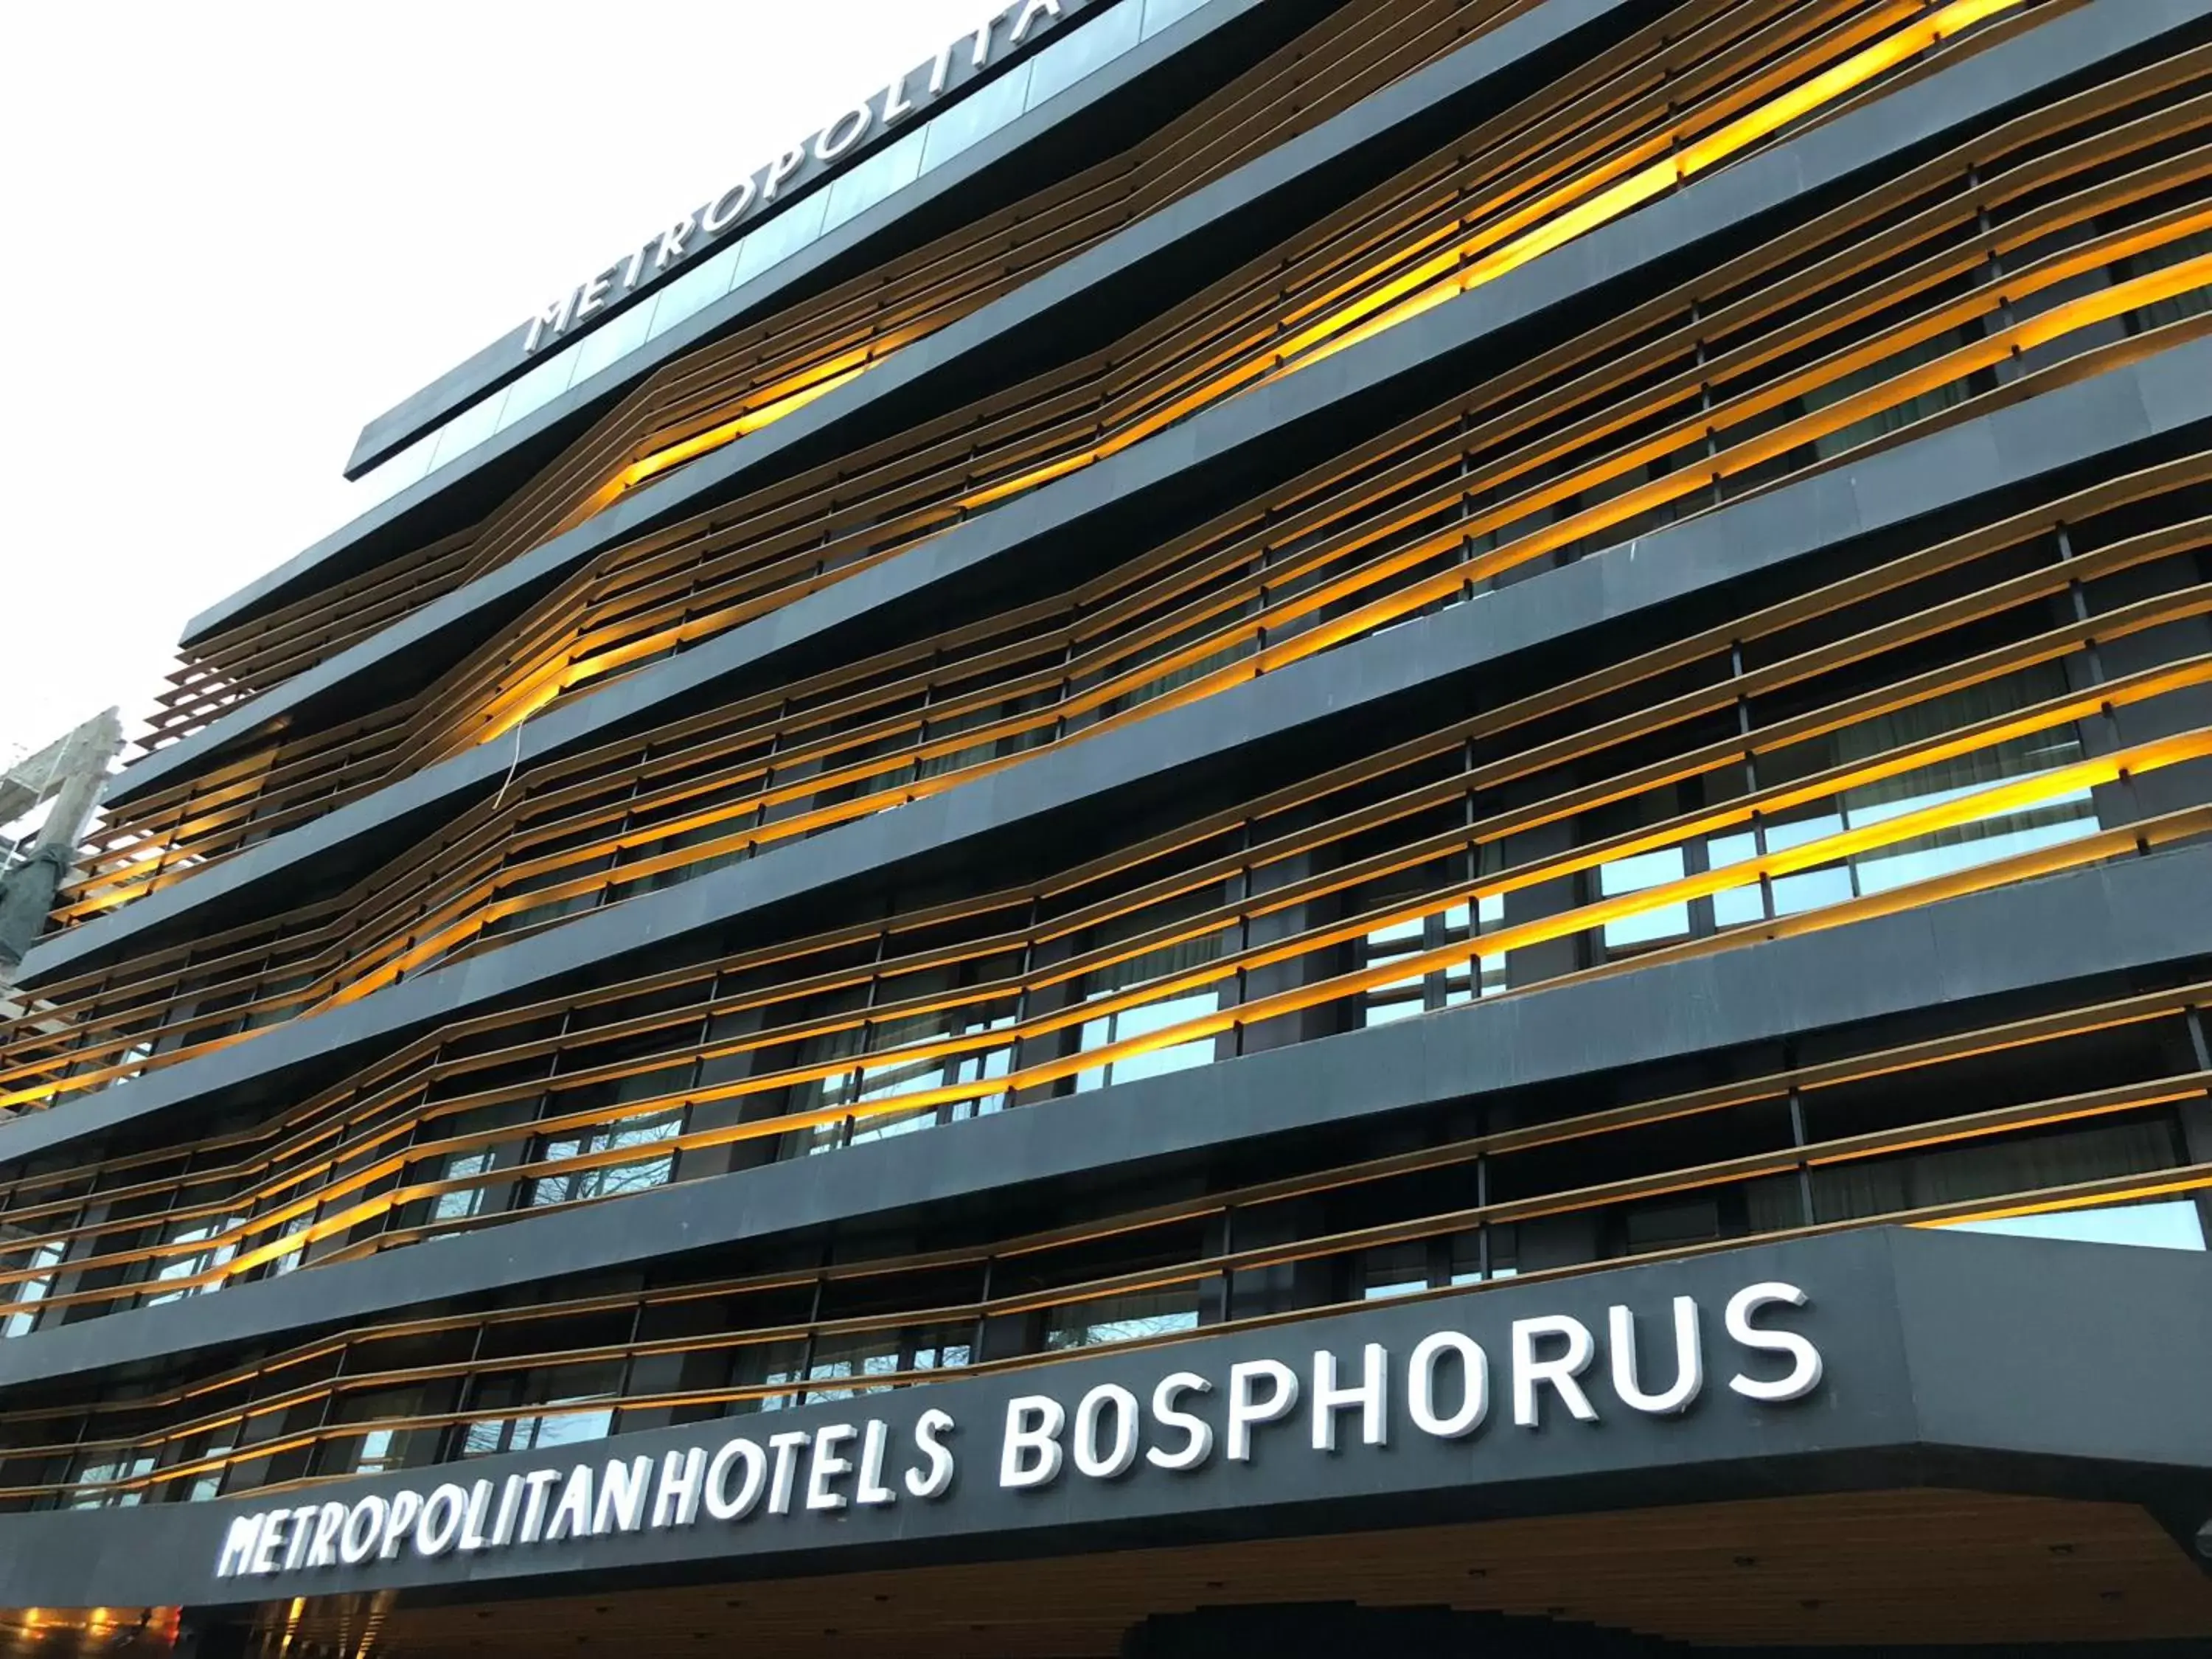 Off site, Property Building in Metropolitan Hotels Bosphorus